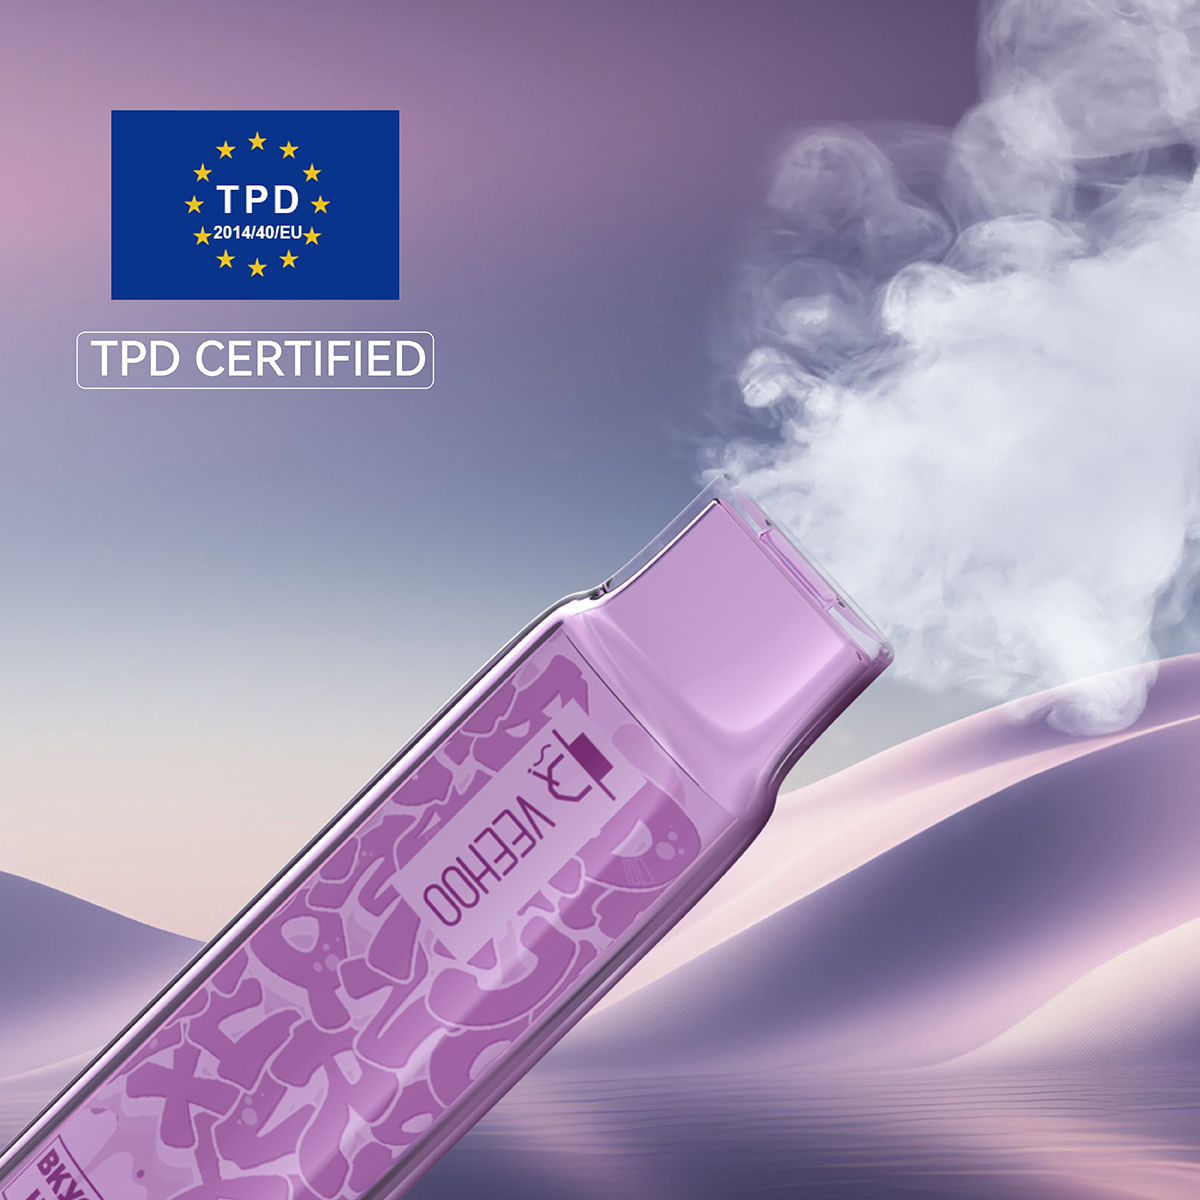 D3 S 1200 Puffs Disposable Vape TPD Certification